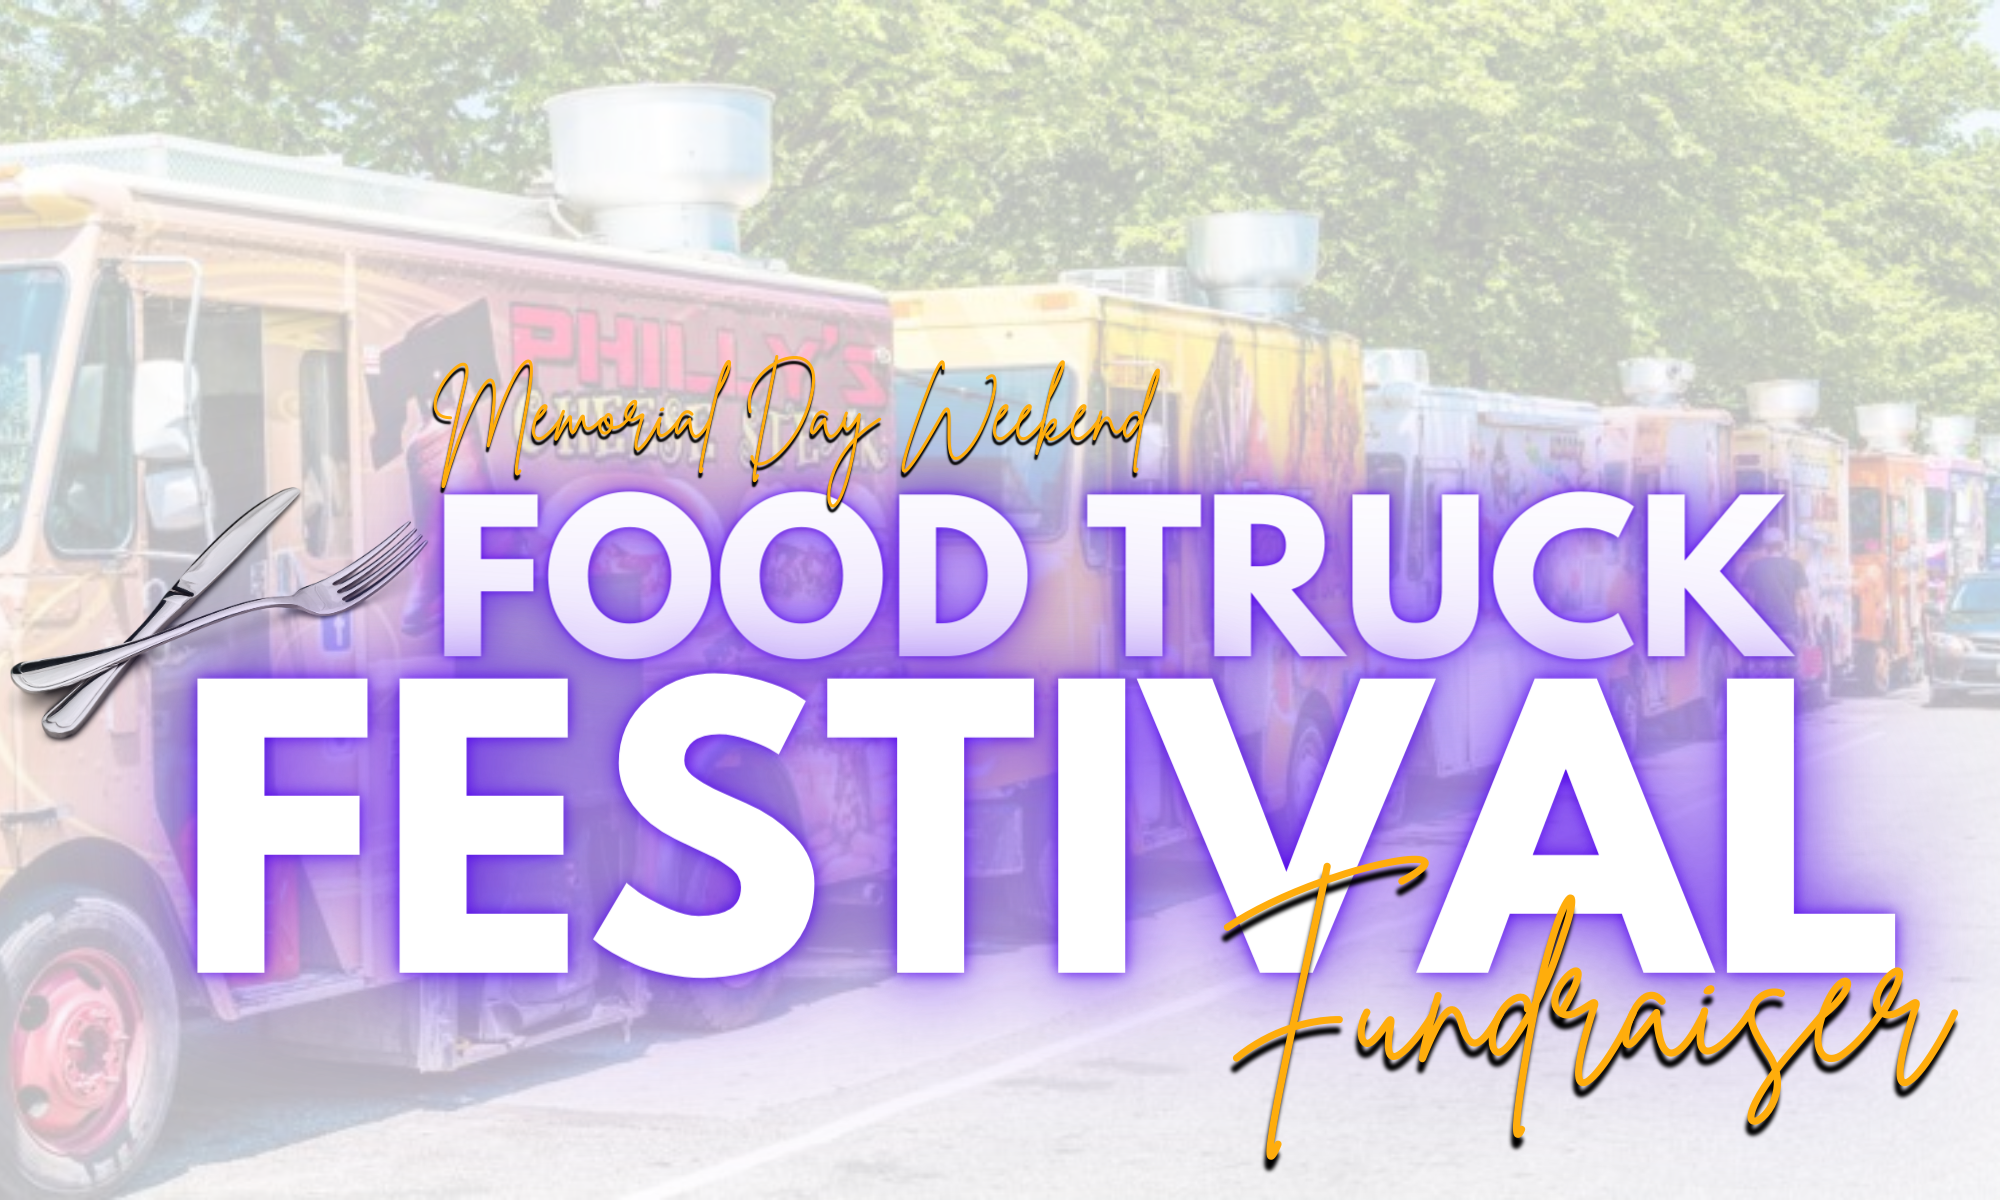 Food Truck Festival Fundraiser